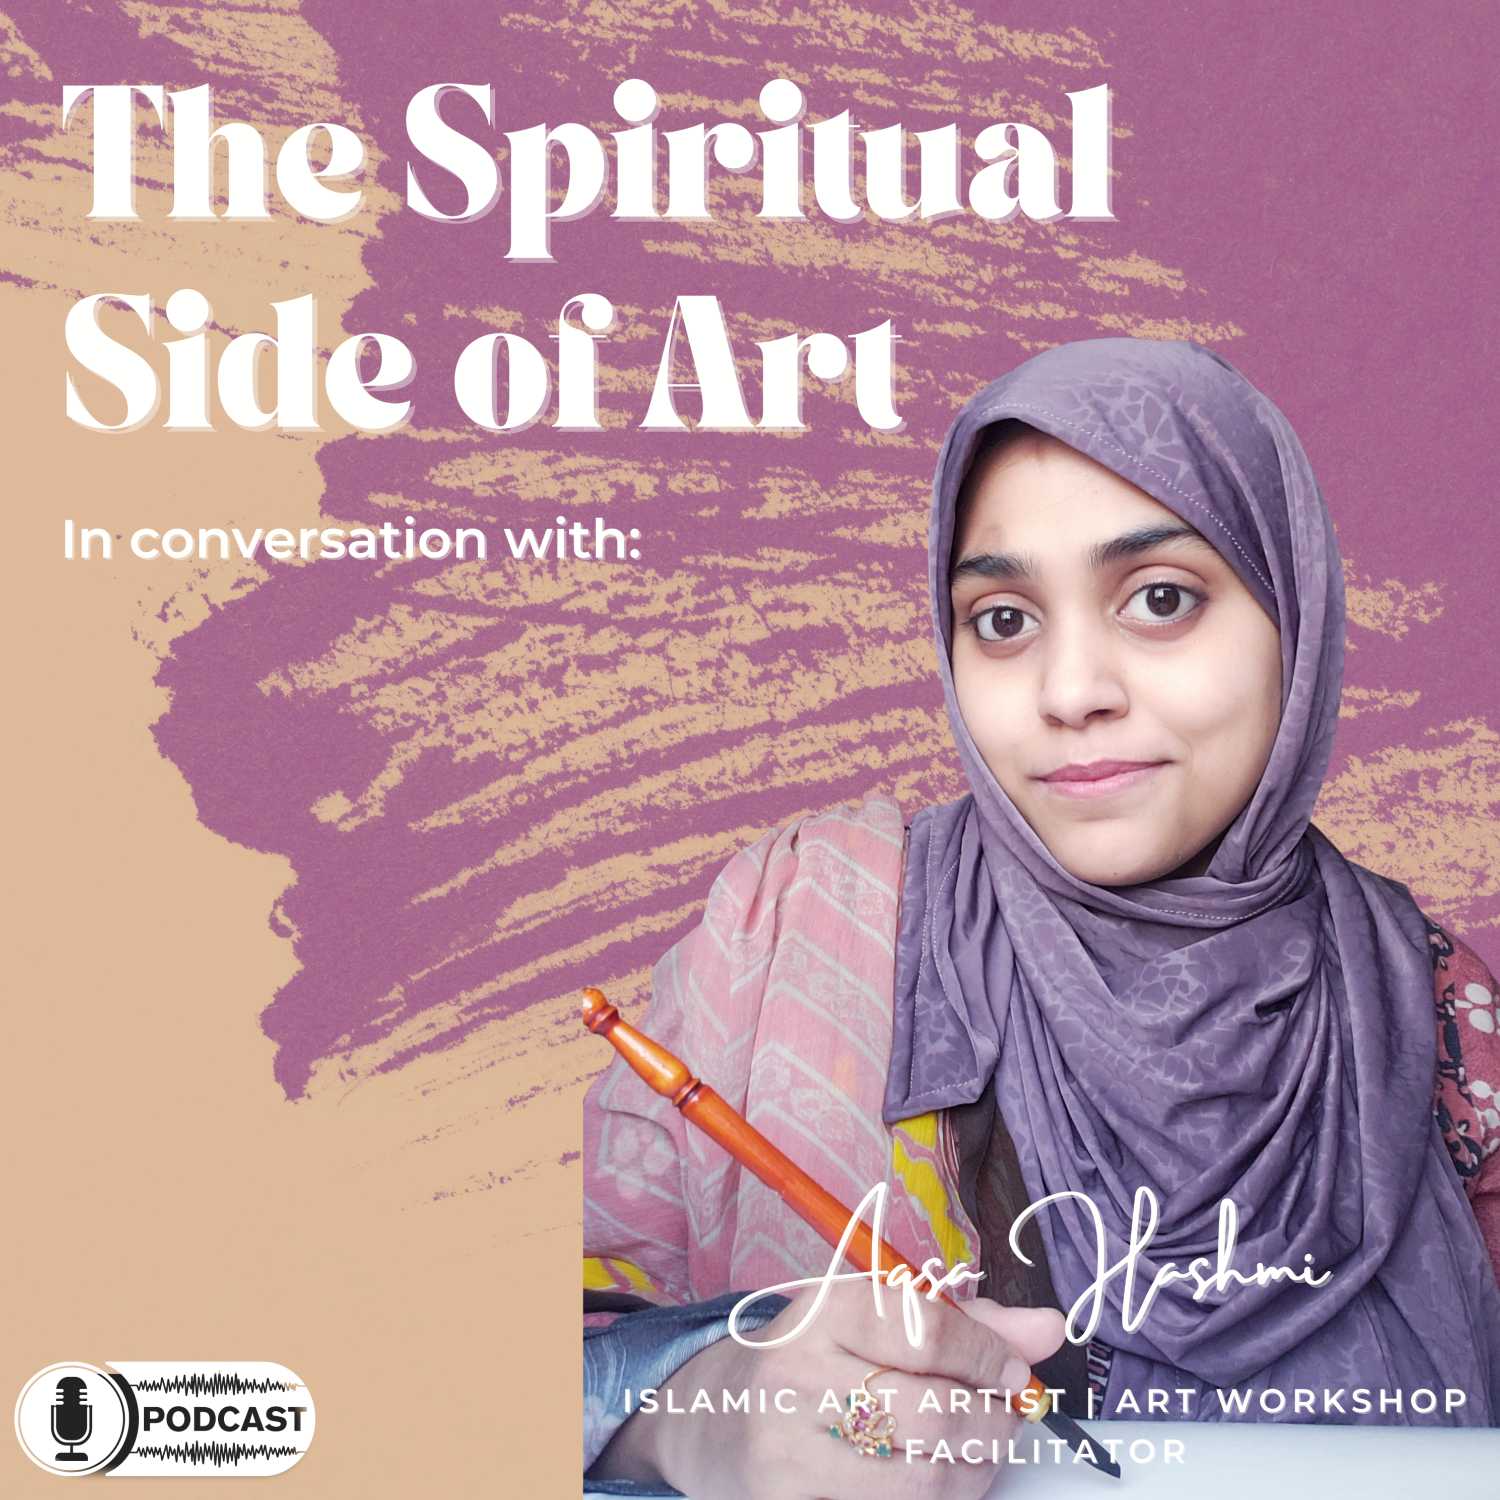 Art as a Conversation Starter (with Aqsa Hashmi)